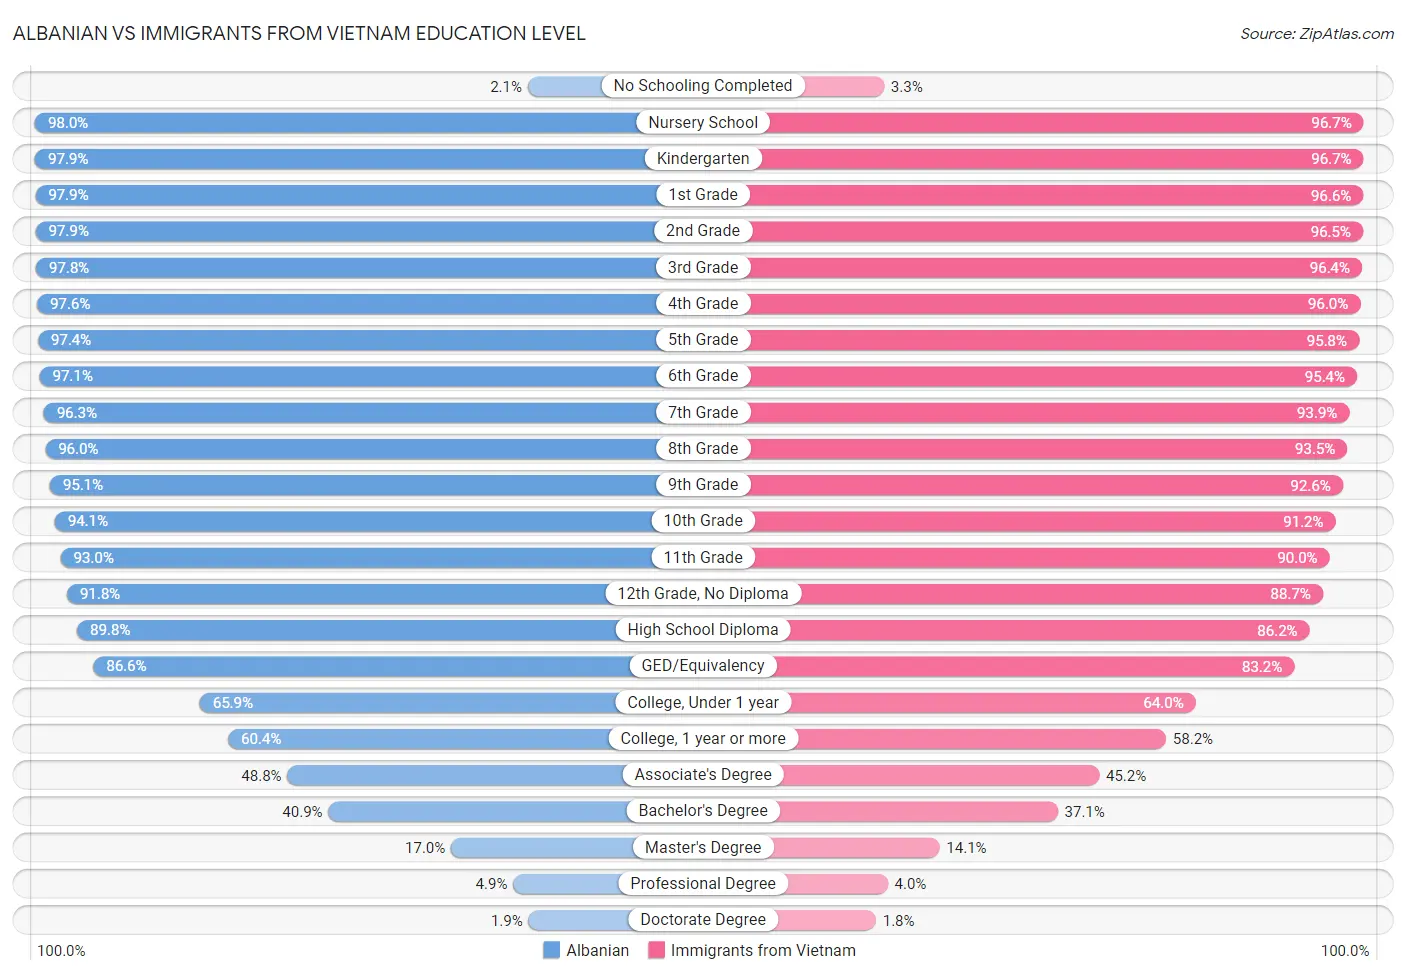 Albanian vs Immigrants from Vietnam Education Level